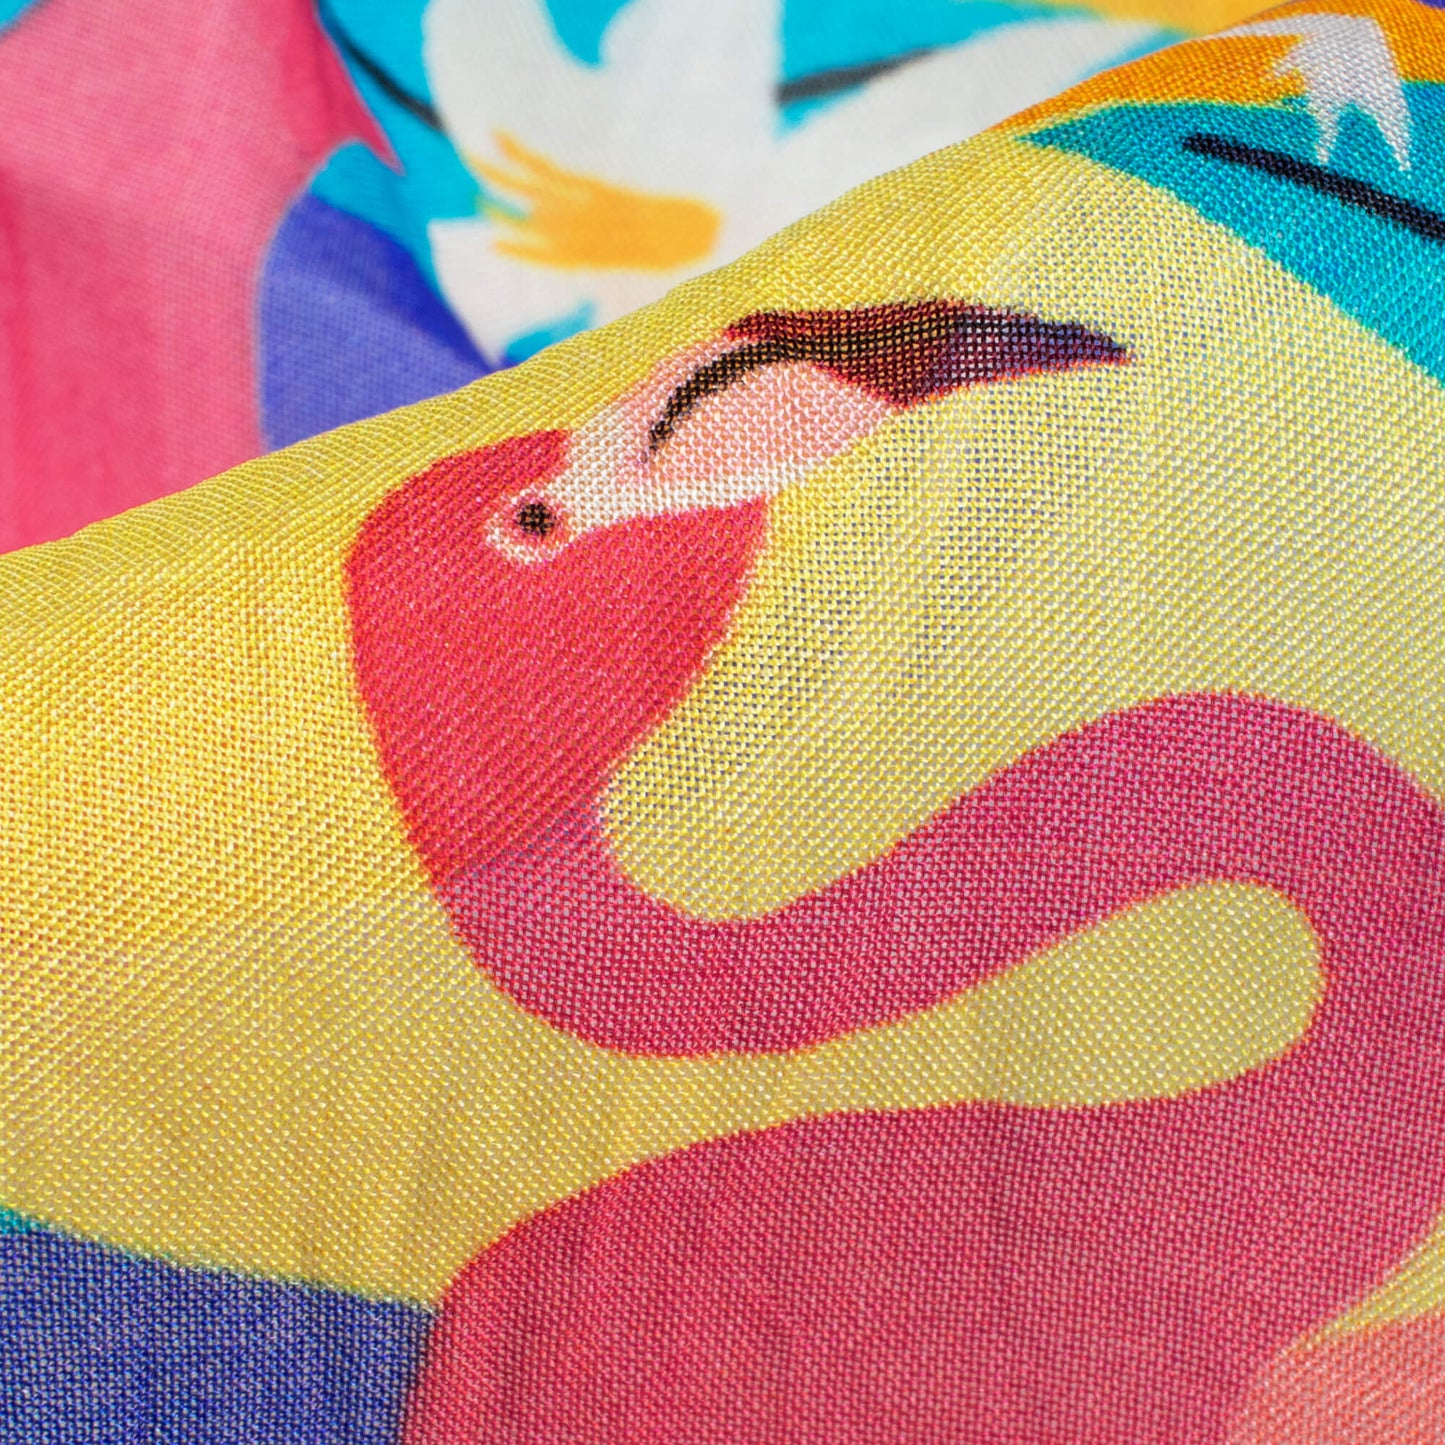 Multi-Color Bird Pattern Digital Print Viscose Paper Silk Fabric